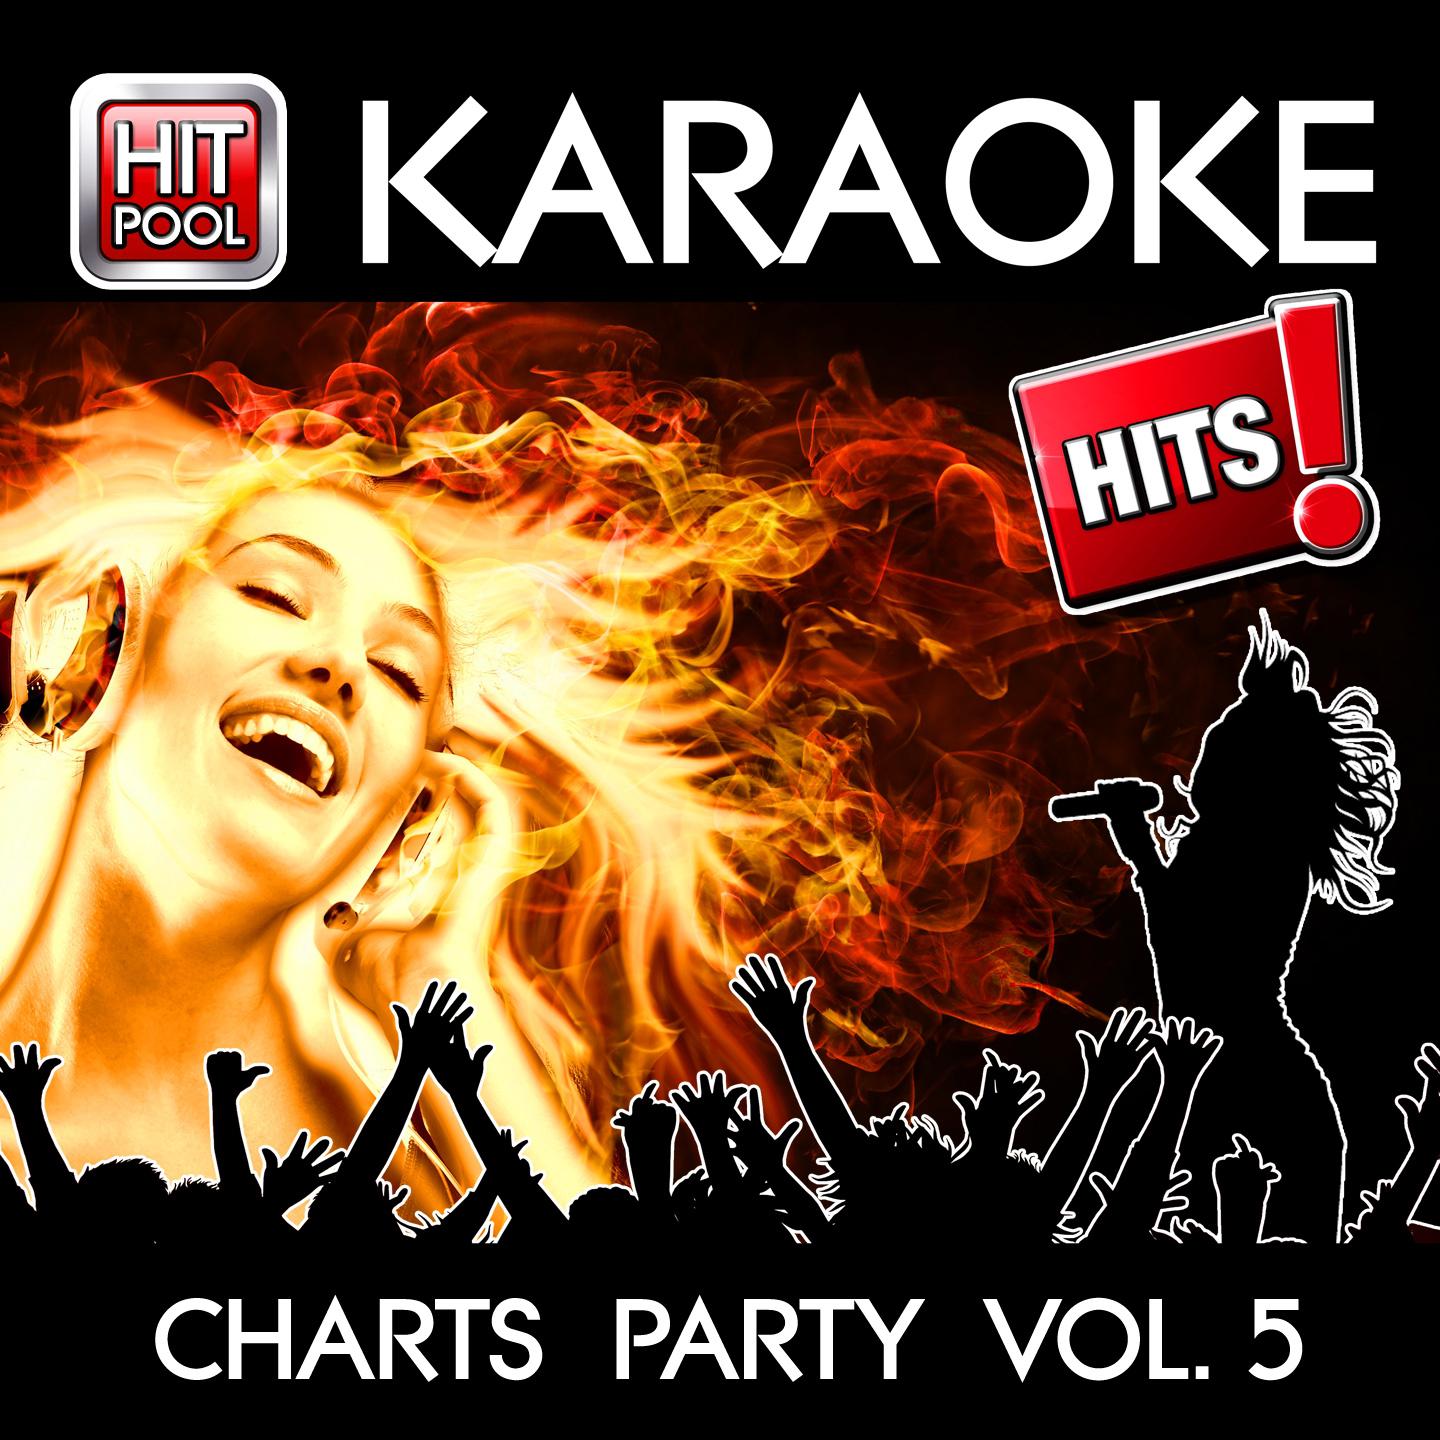 Hitpool Karaoke Hits: Charts Party, Vol. 5